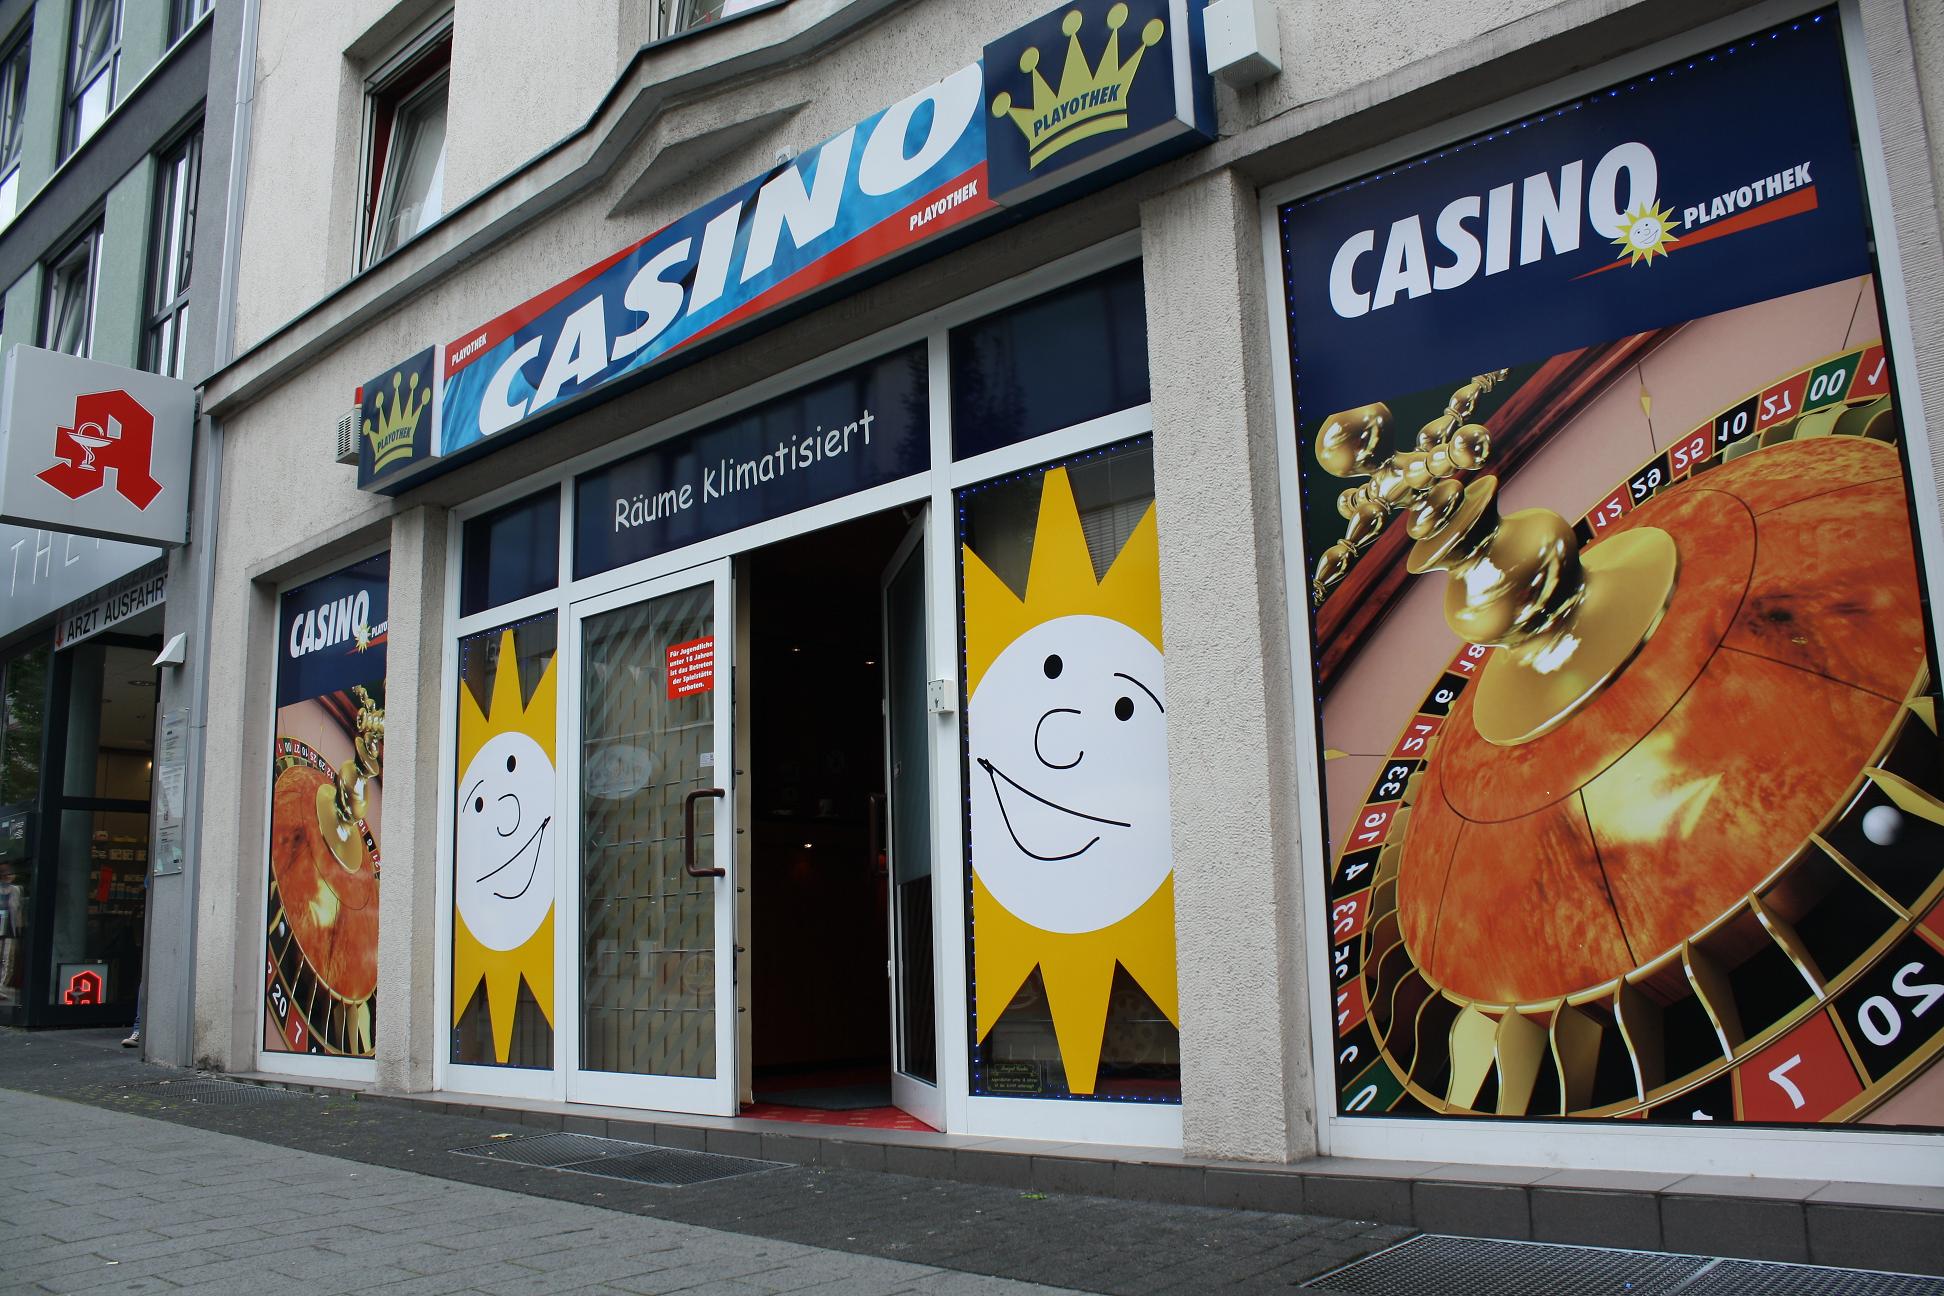 Playothek Casino